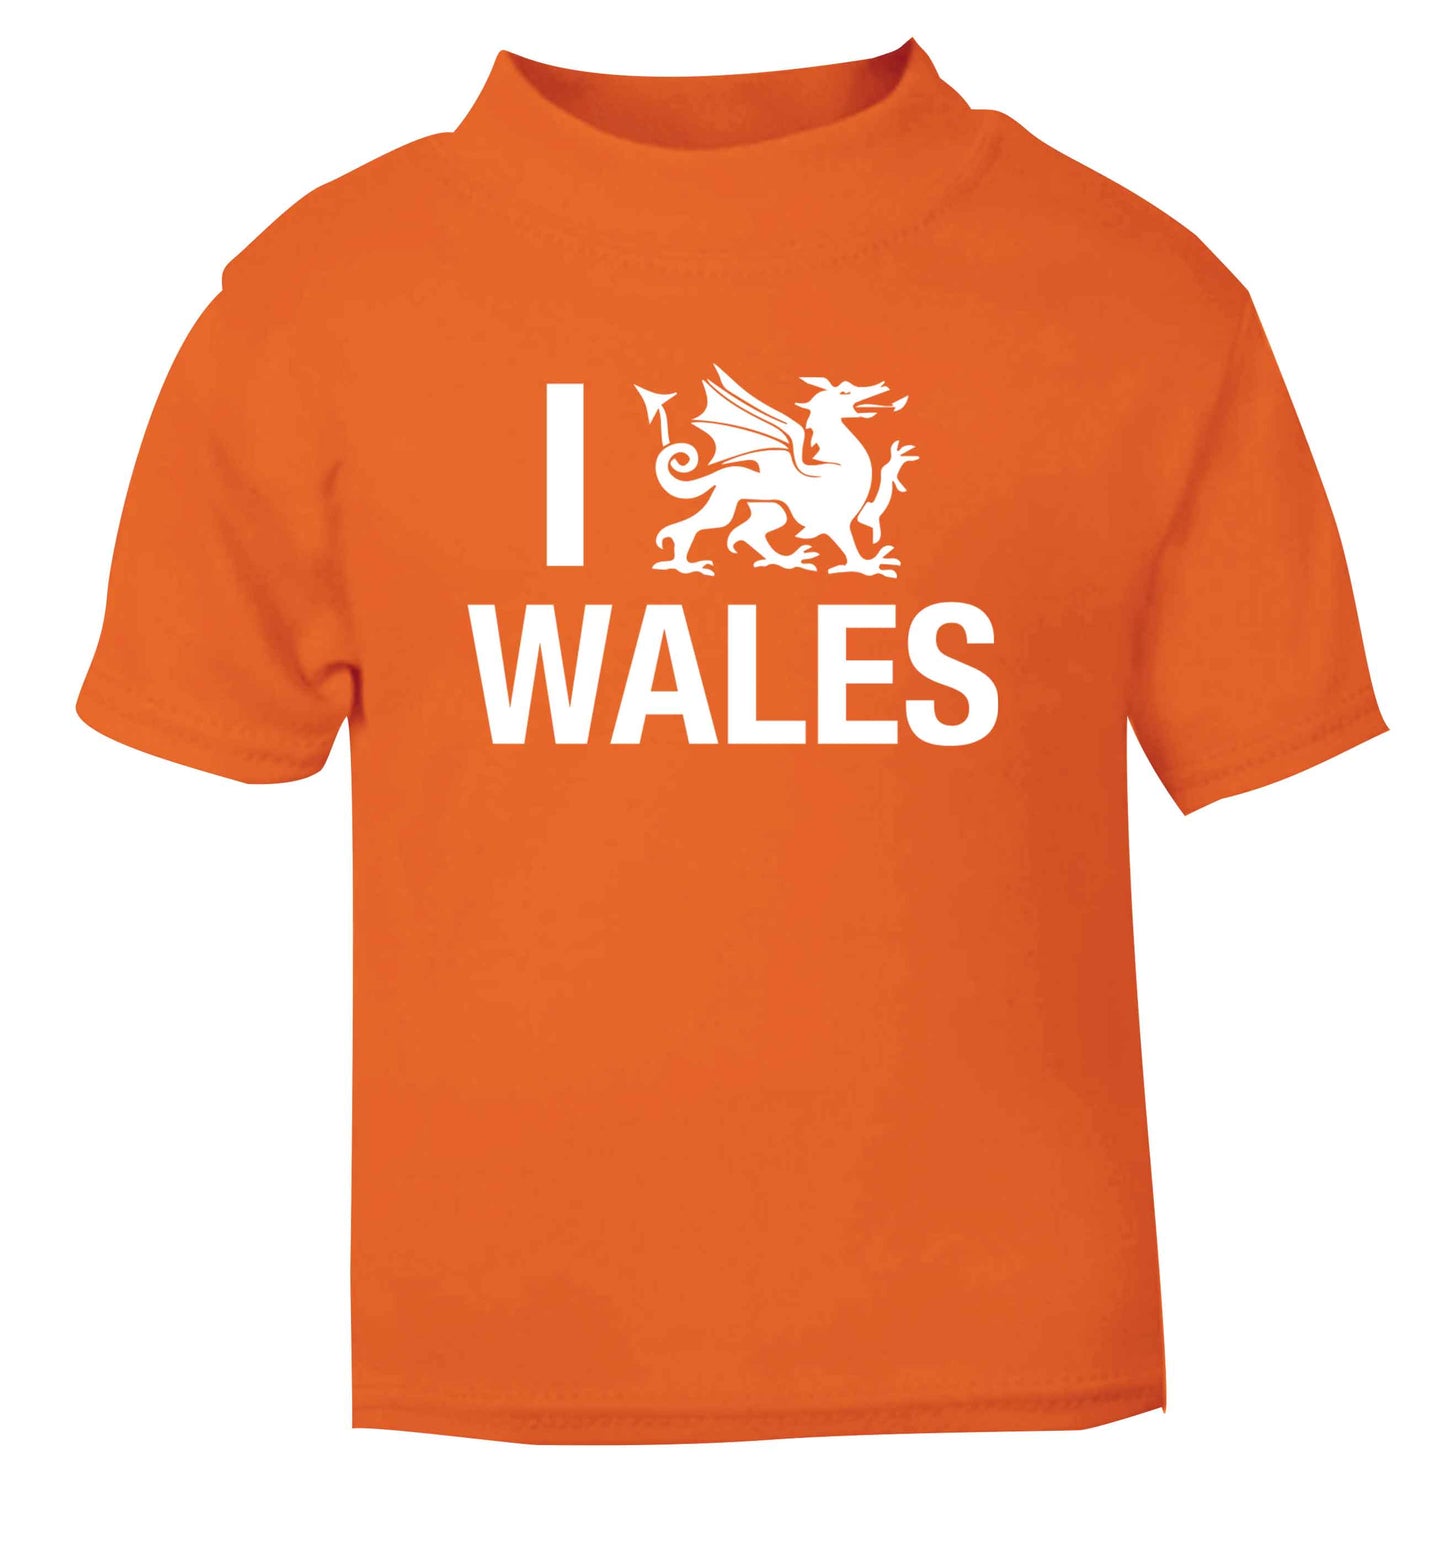 I love Wales orange Baby Toddler Tshirt 2 Years